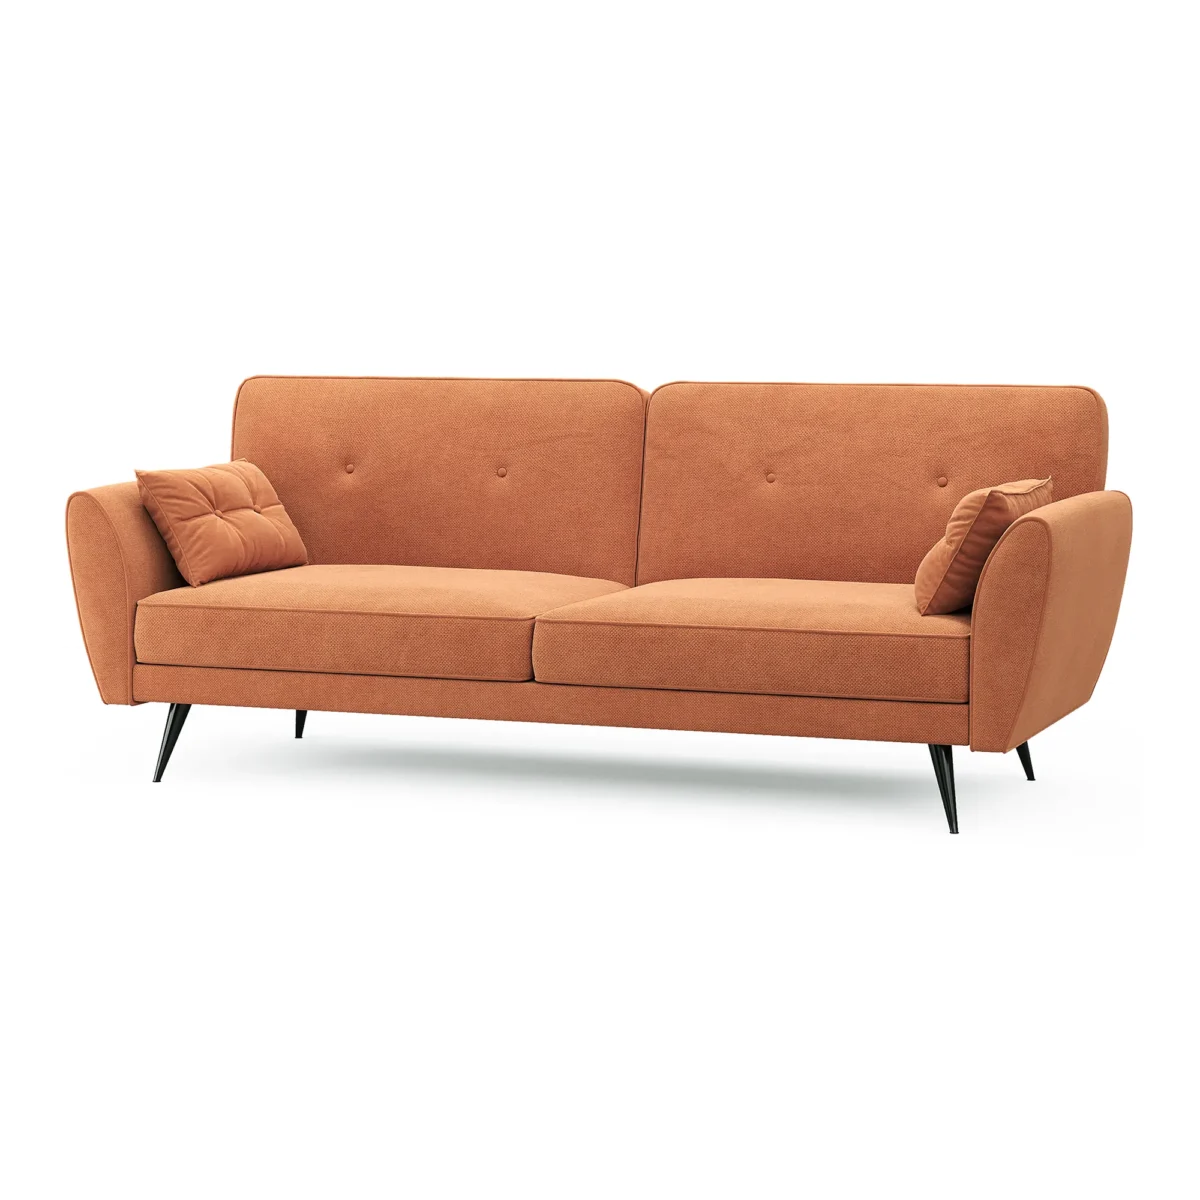 Edinburgh Orange sofa bed 3D model download Free on cg.market 3ds max Corona Render